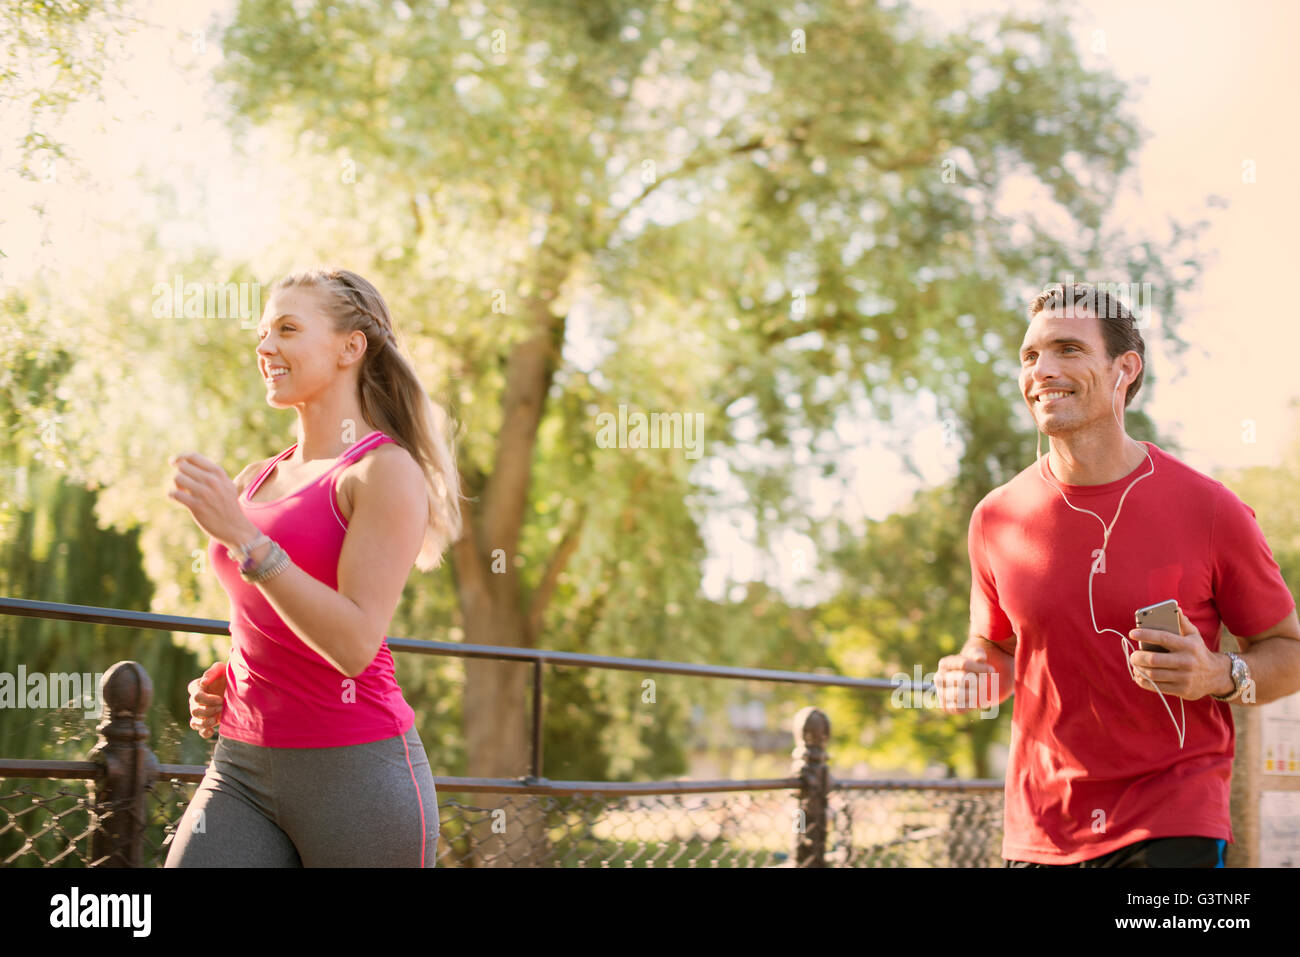 A man and a woman jogging through a park. Stock Photo